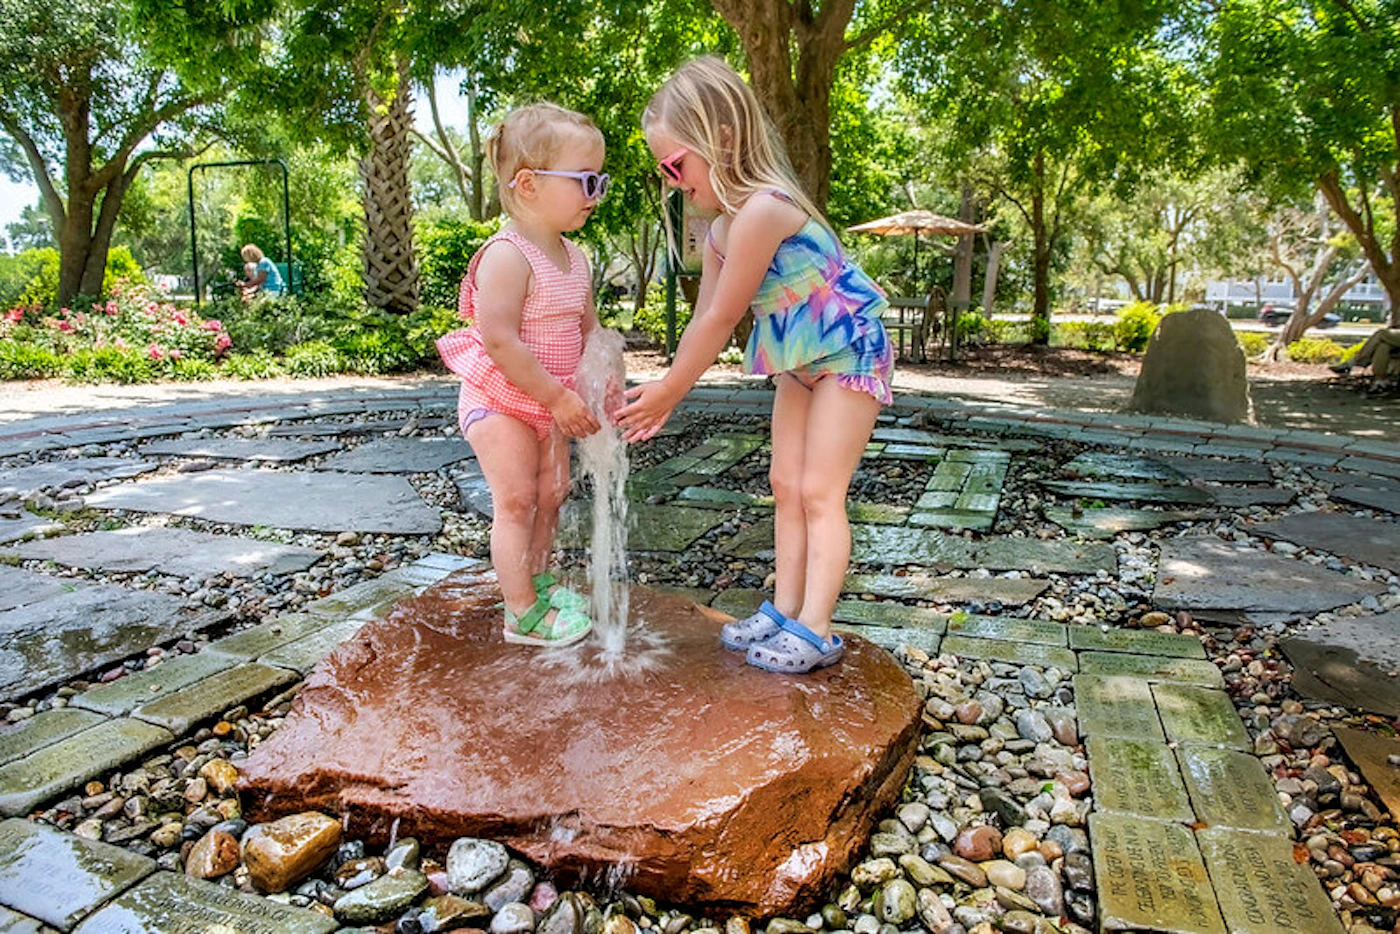 Harbor Way Gardens, fun for the whole family. (Image via Wilmington and Beaches CVB)